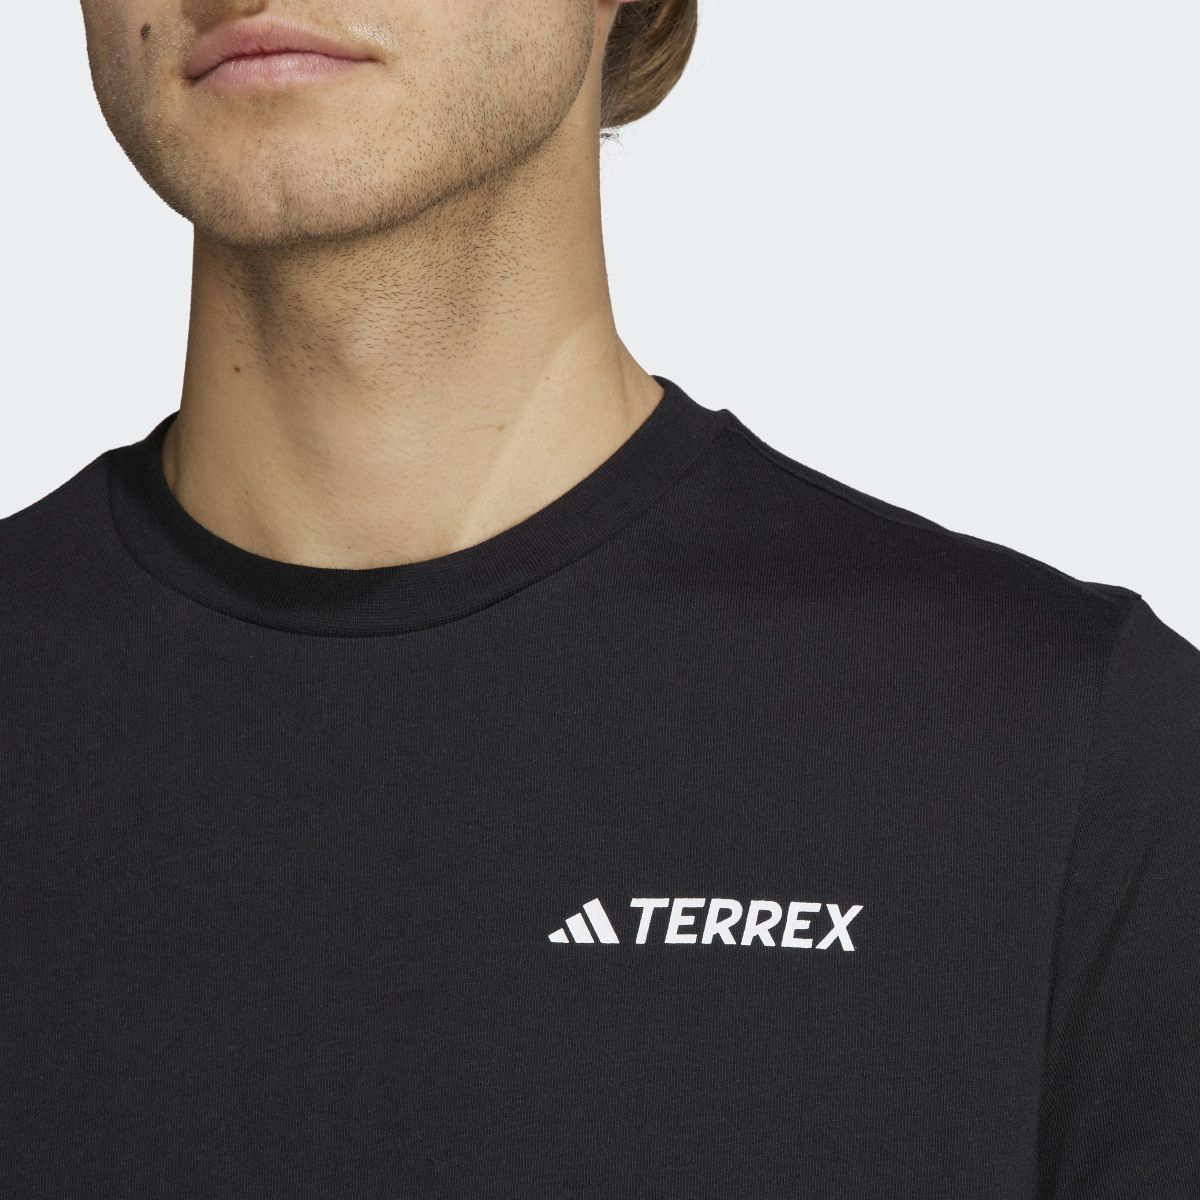 Adidas T-shirt MTN 2.0 TERREX. 6